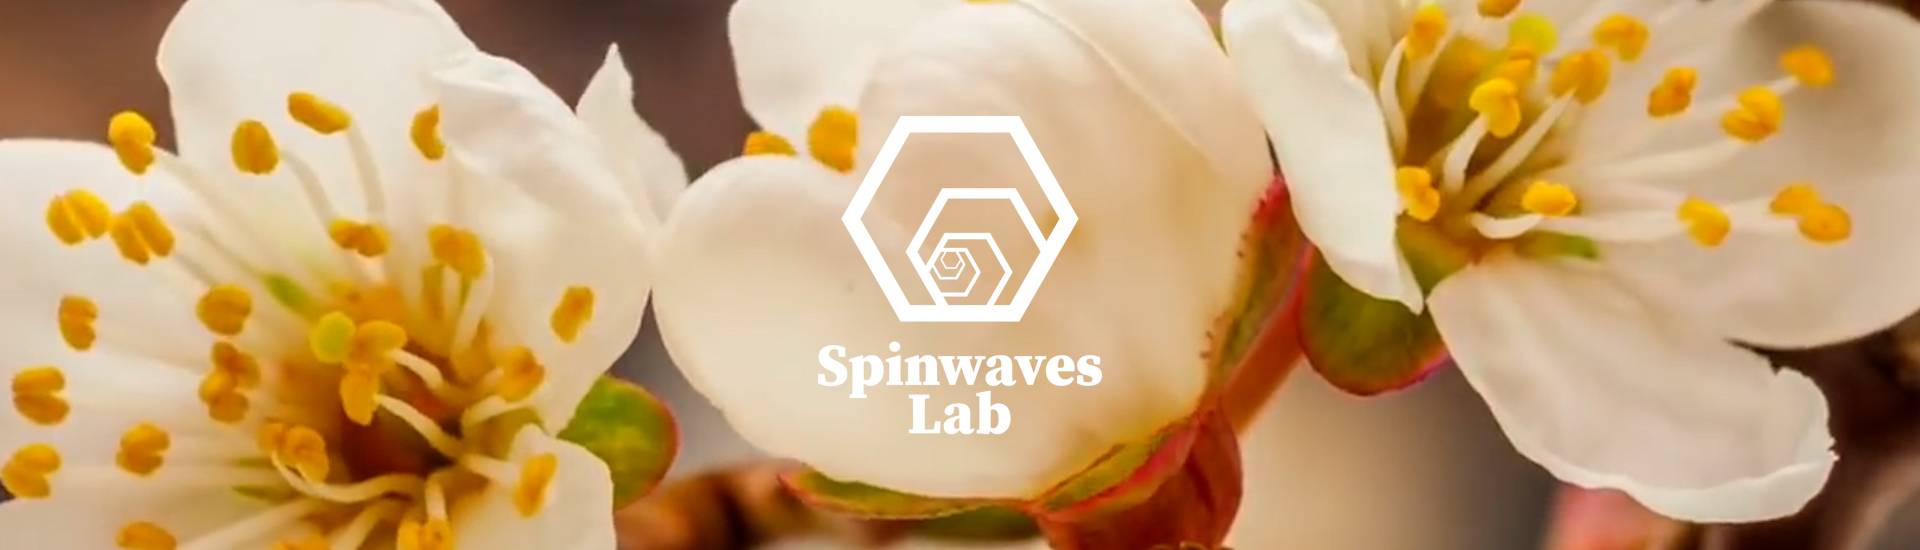 Bloemen met tekst Spinwaves Lab erin